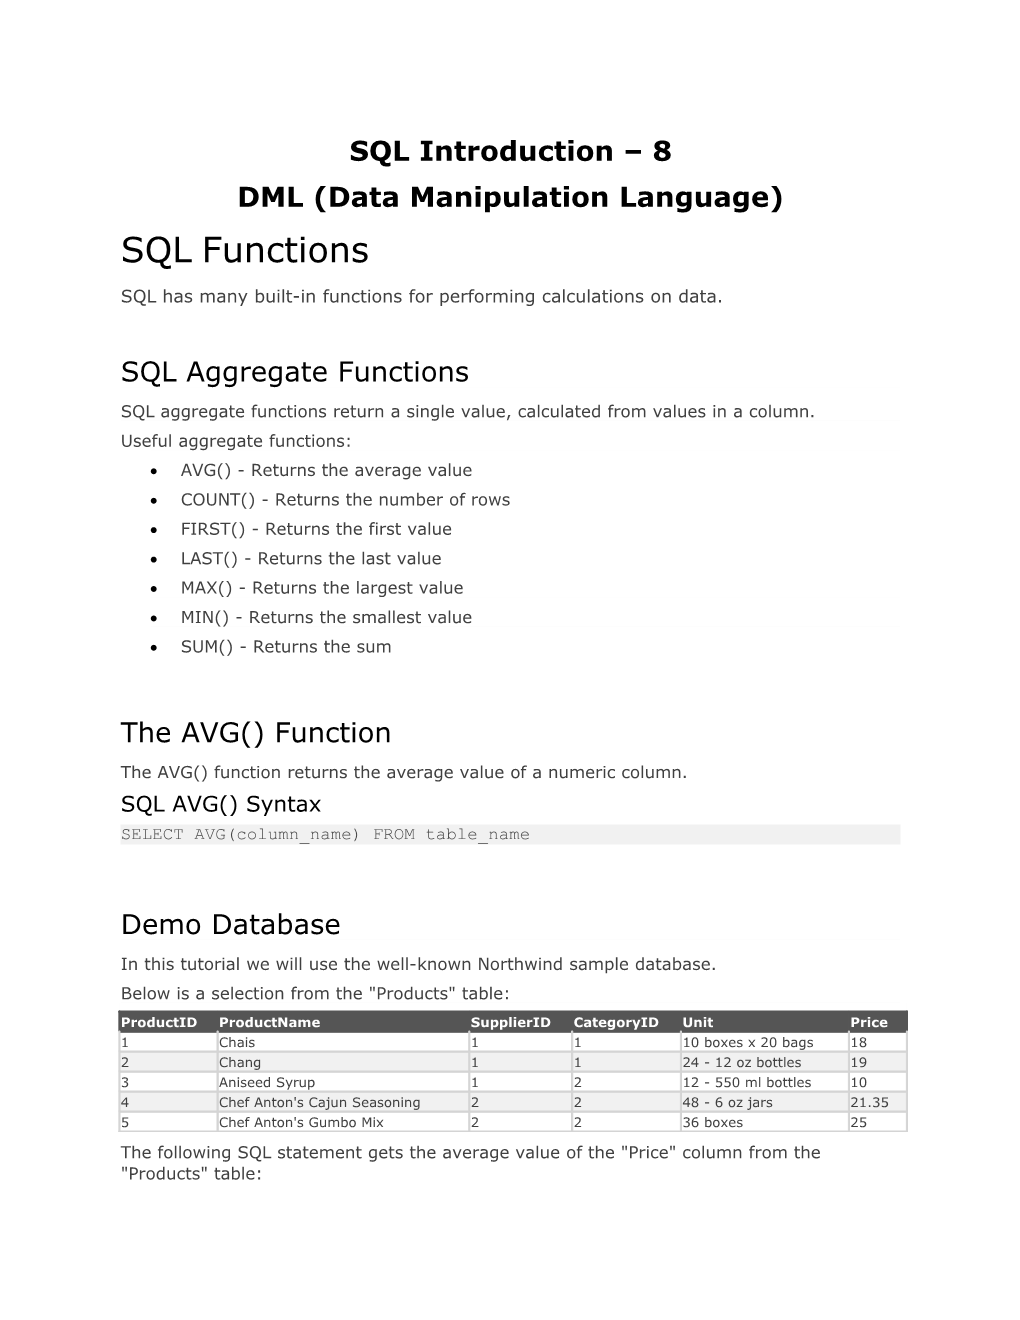 DML (Data Manipulation Language)